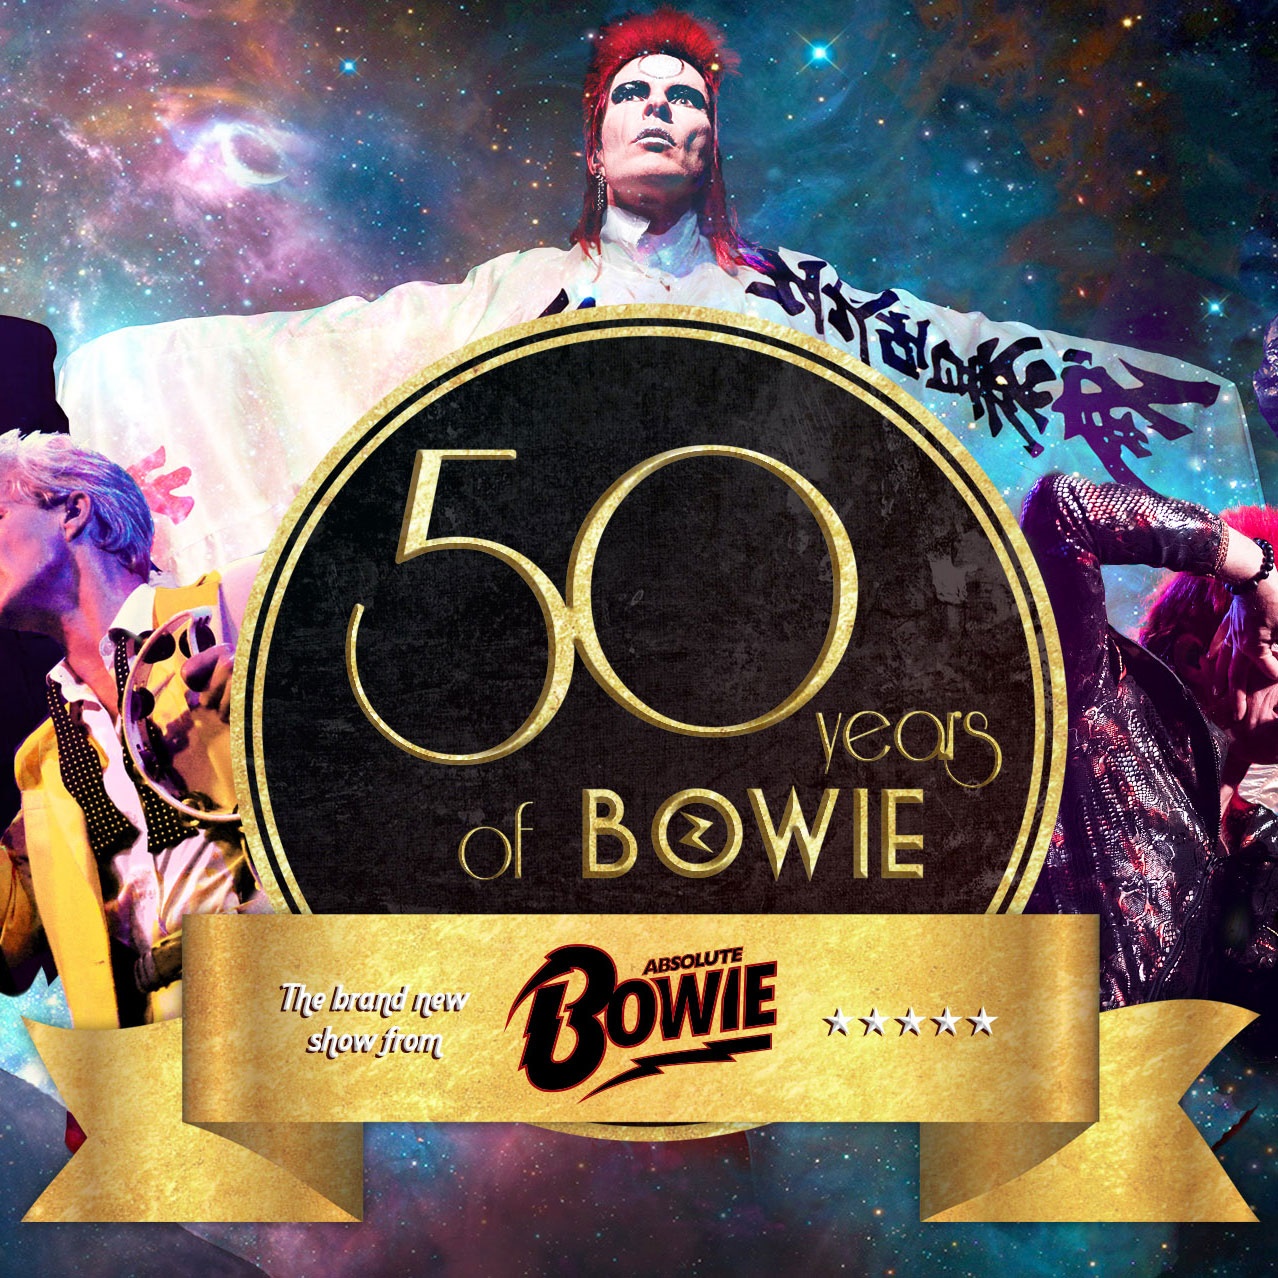 Help us celebrate 50 years of Bowie, here in Halton